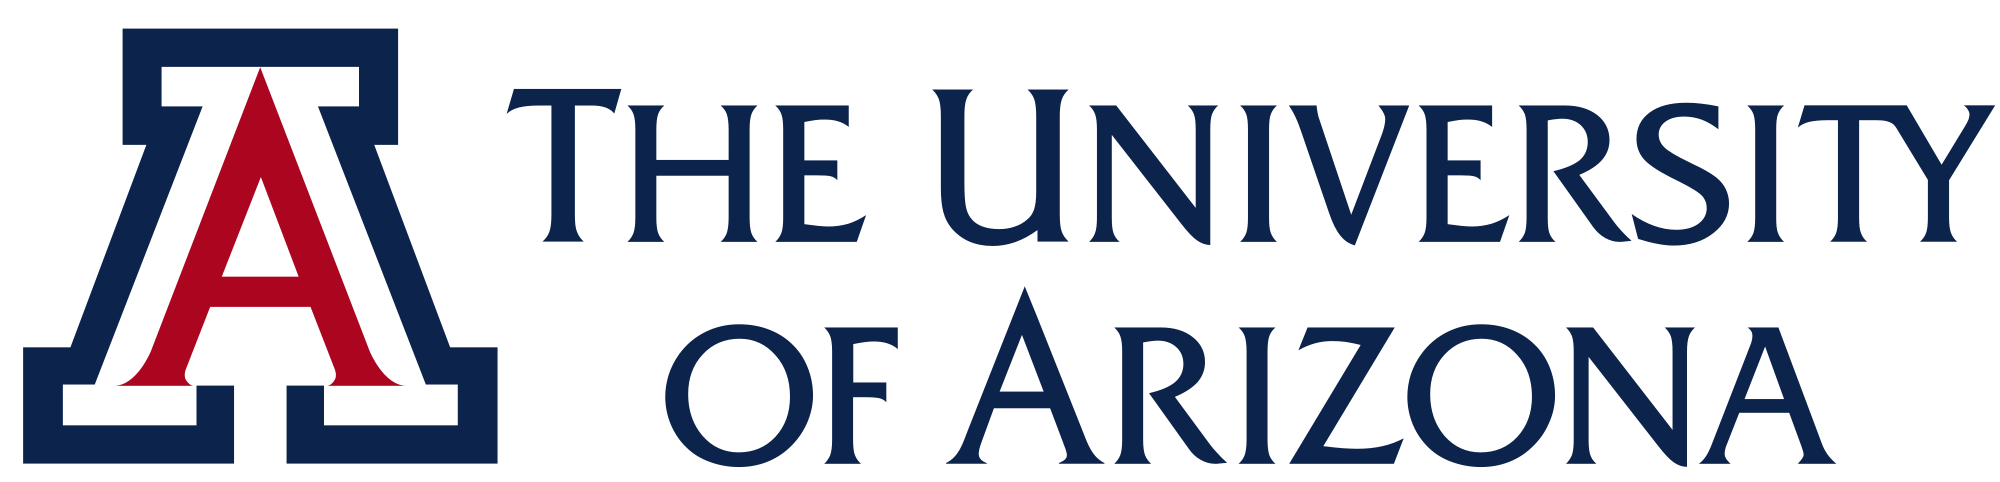 Univeristy of Arizona Logo - Rahul Kumar Bhadani (The University of Arizona)